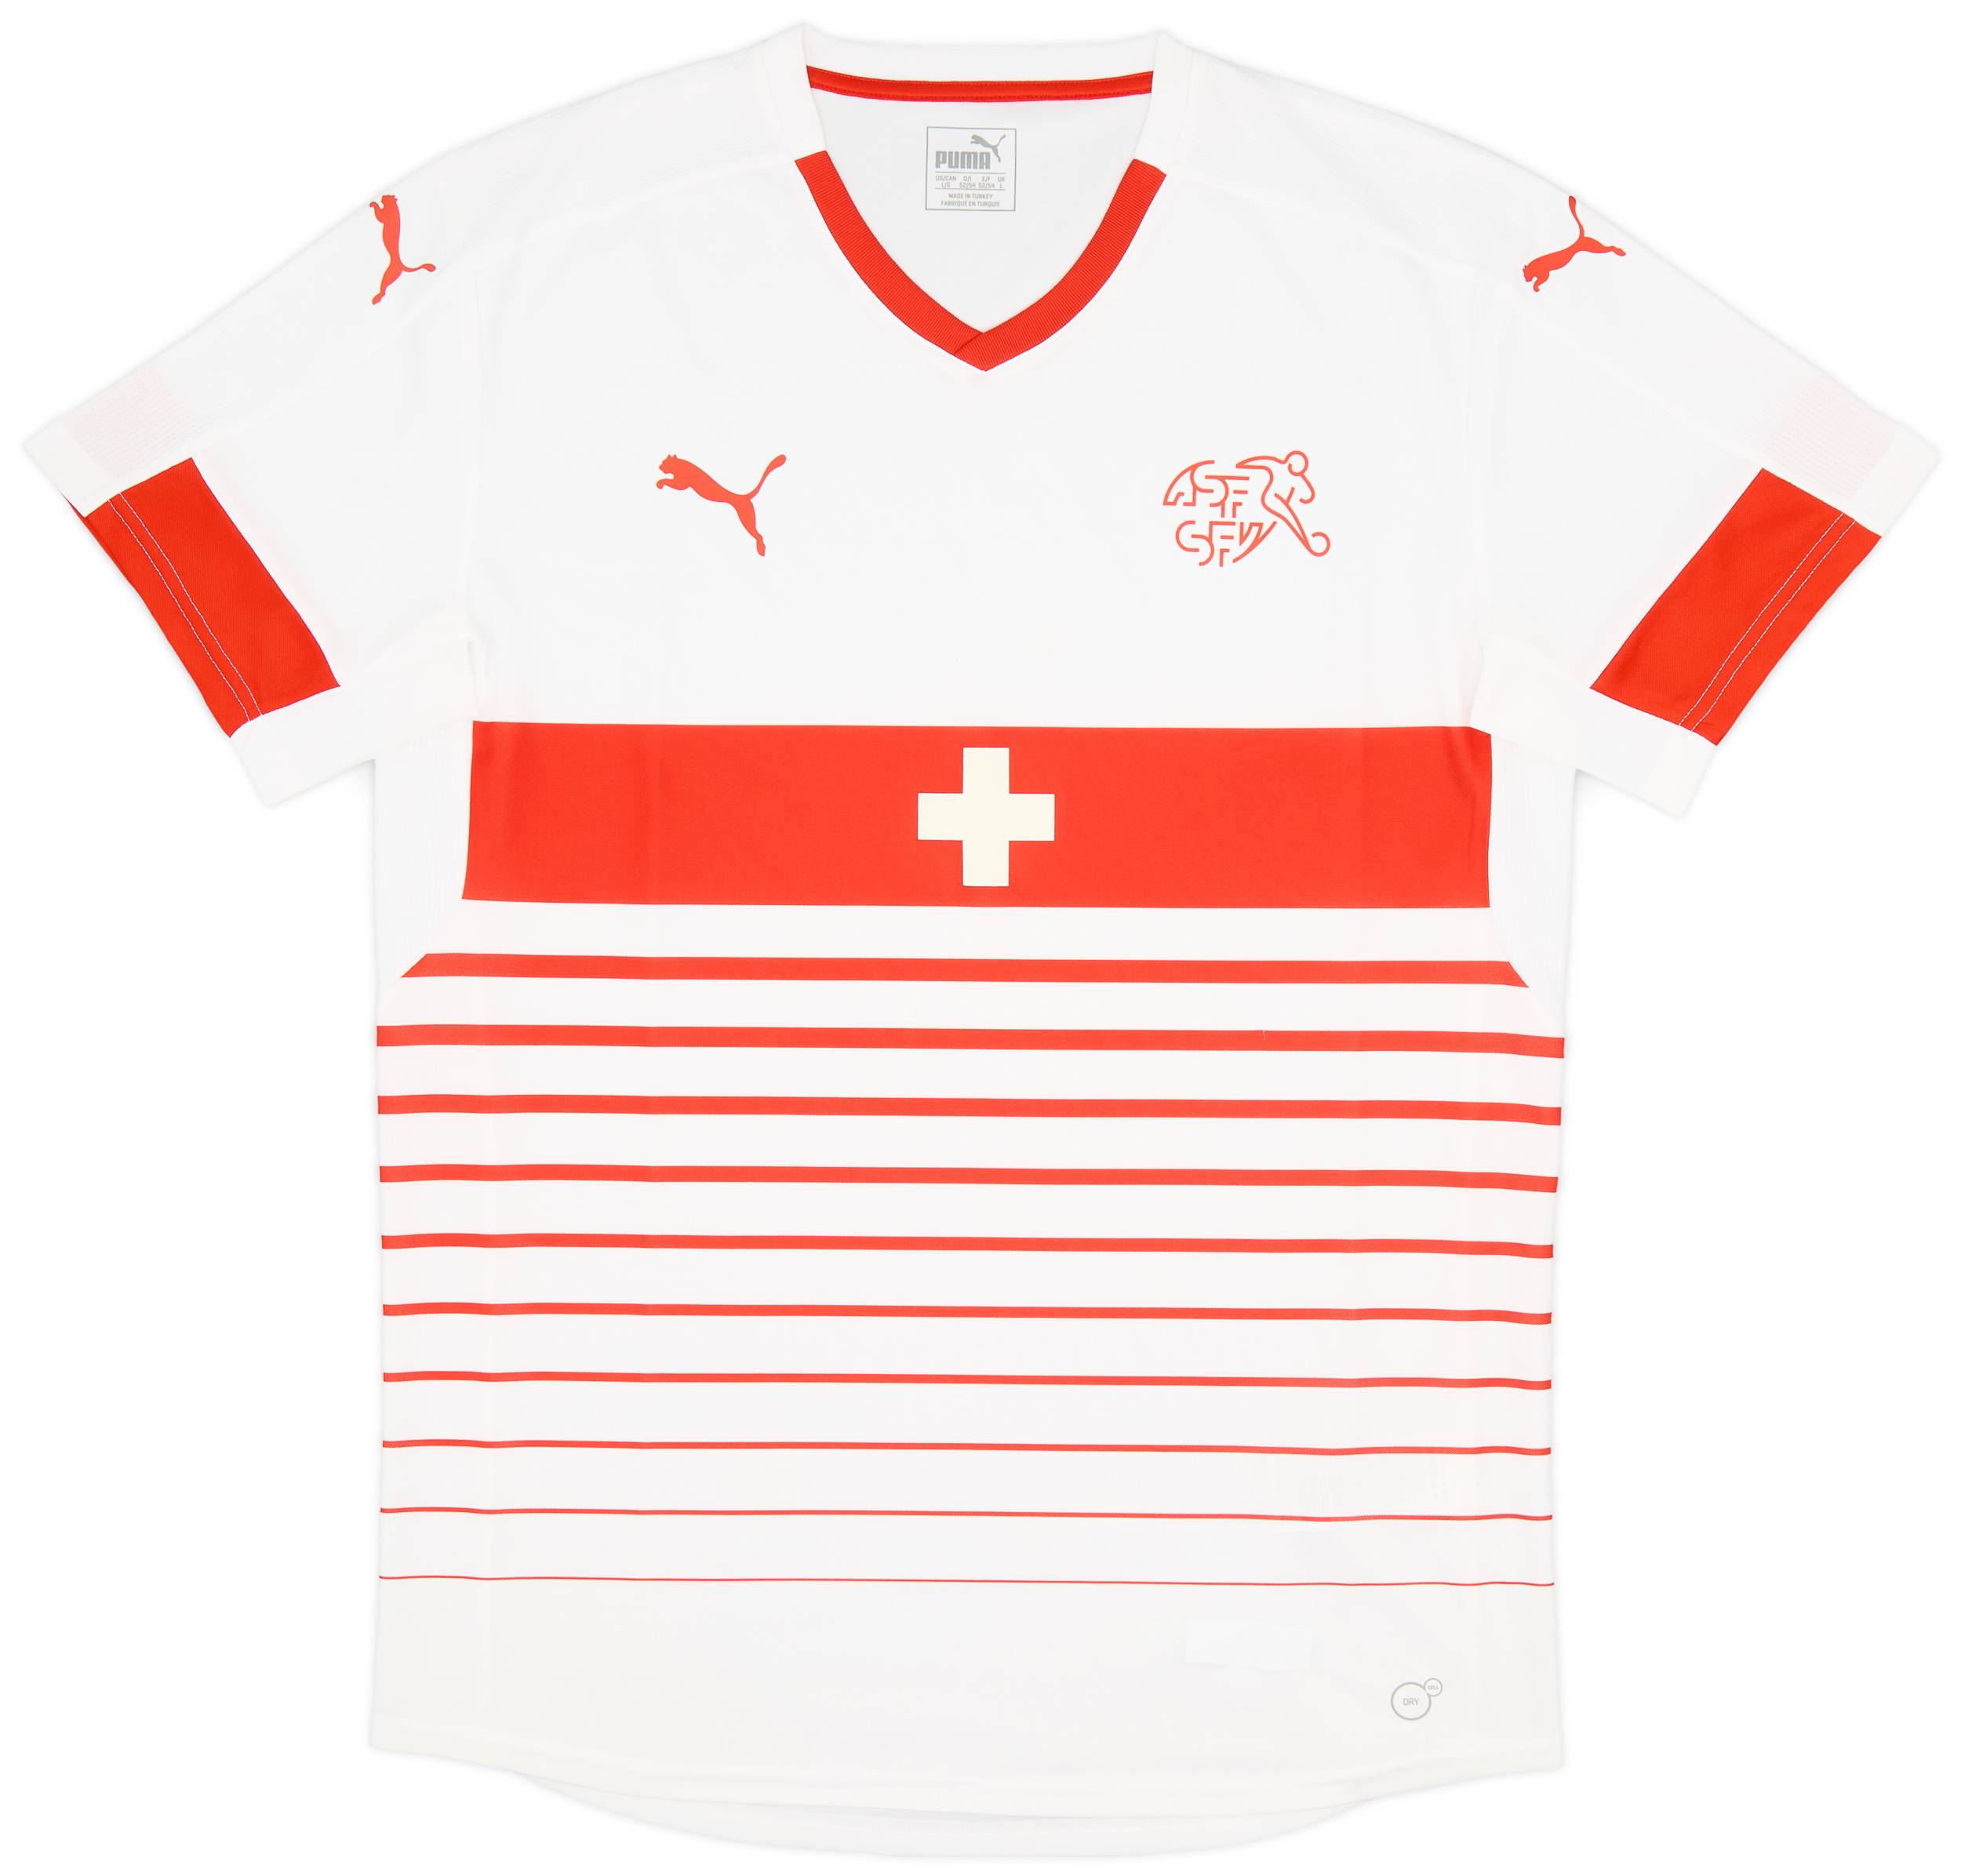 2016-17 Switzerland Away Shirt - 9/10 - (L)